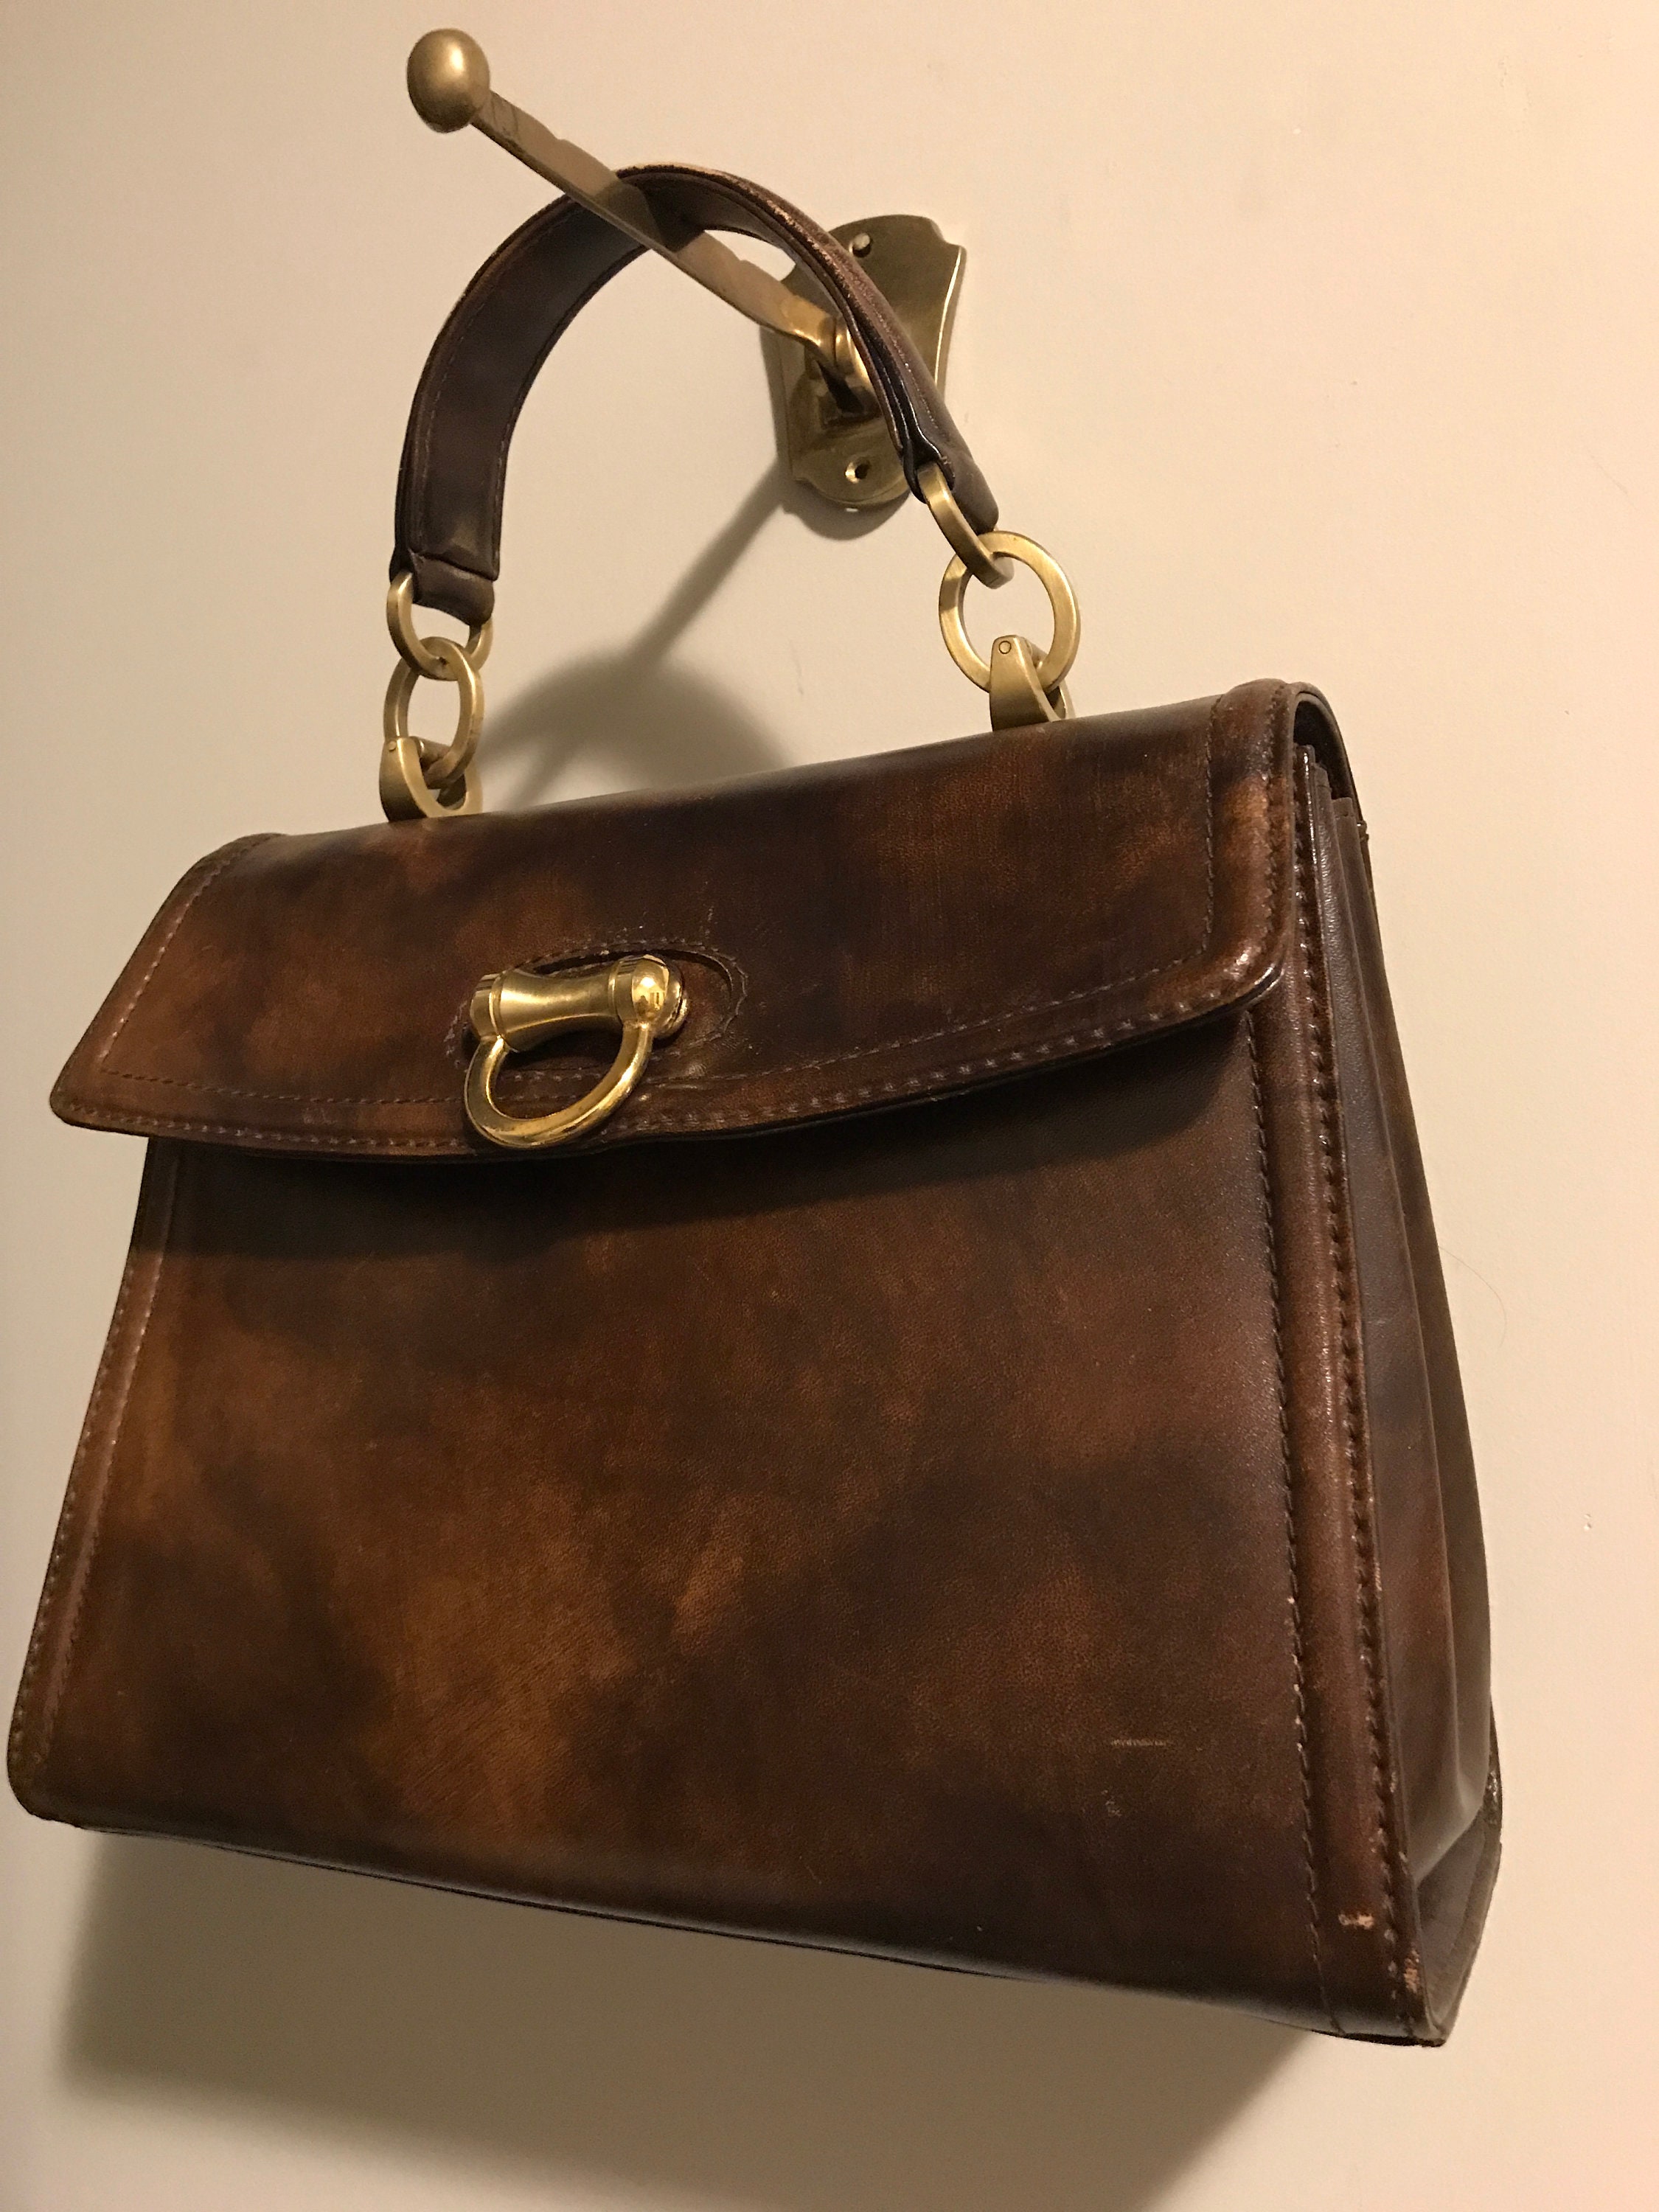 Cursive Lutes Gold Gift Bag Medium – Lute Locker